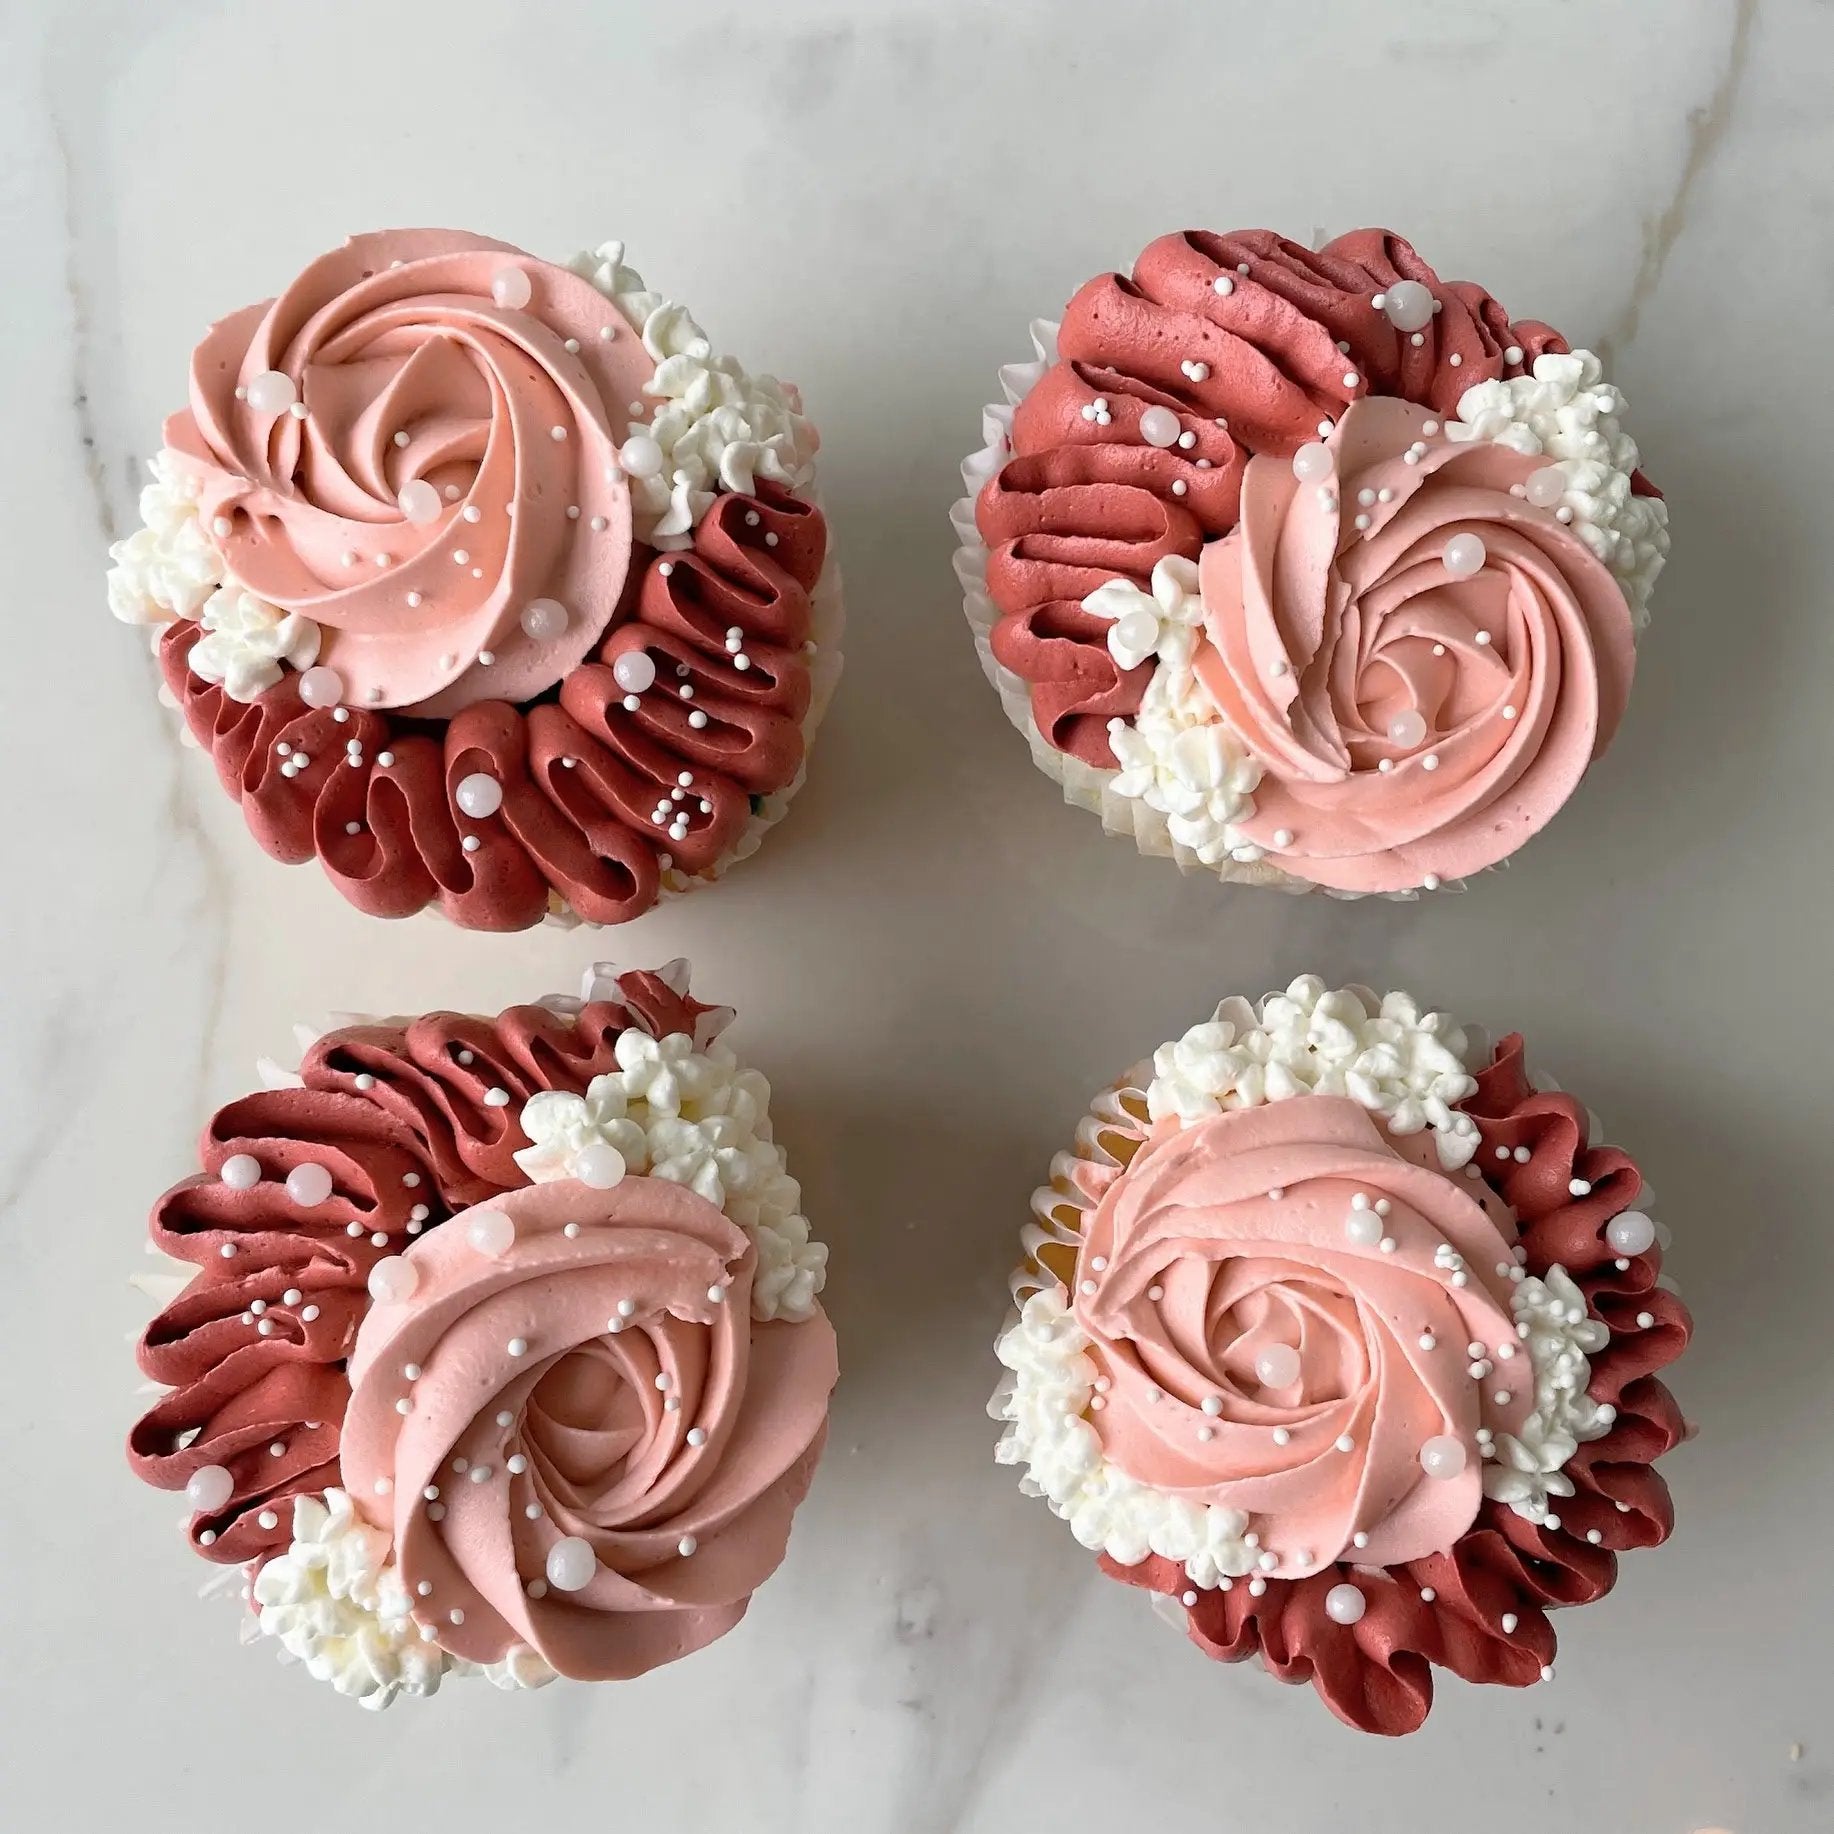 Buy Terracotta Abstract Birthday Celebration Cupcakes | Celebrity Cake Studio